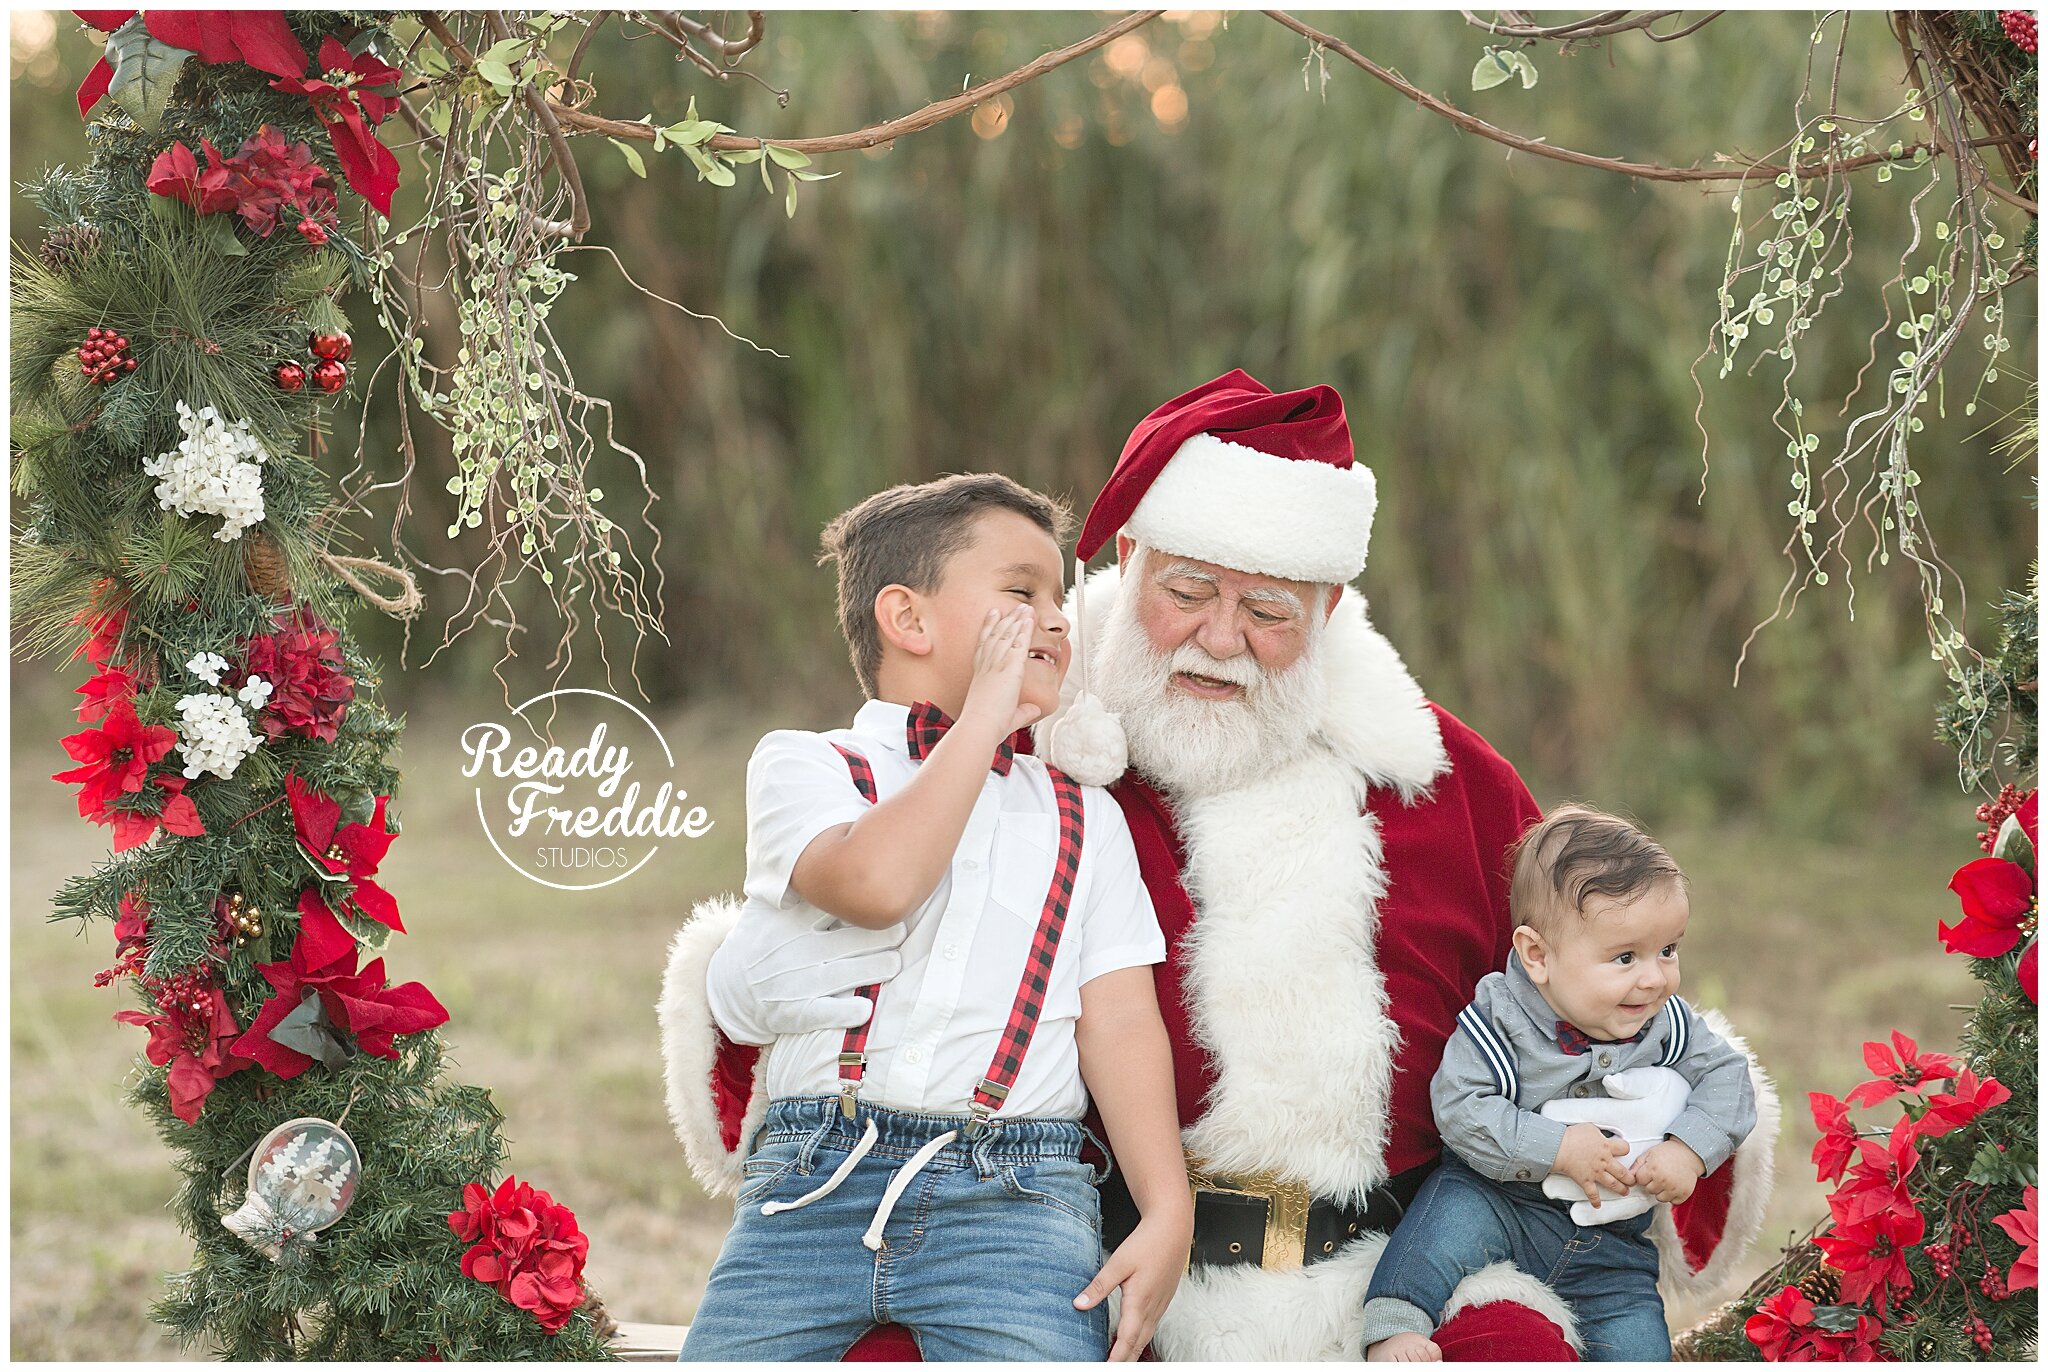 Sibling photos with Santa and giant wreath outdoor | Ready Freddie Studios Miami, FL